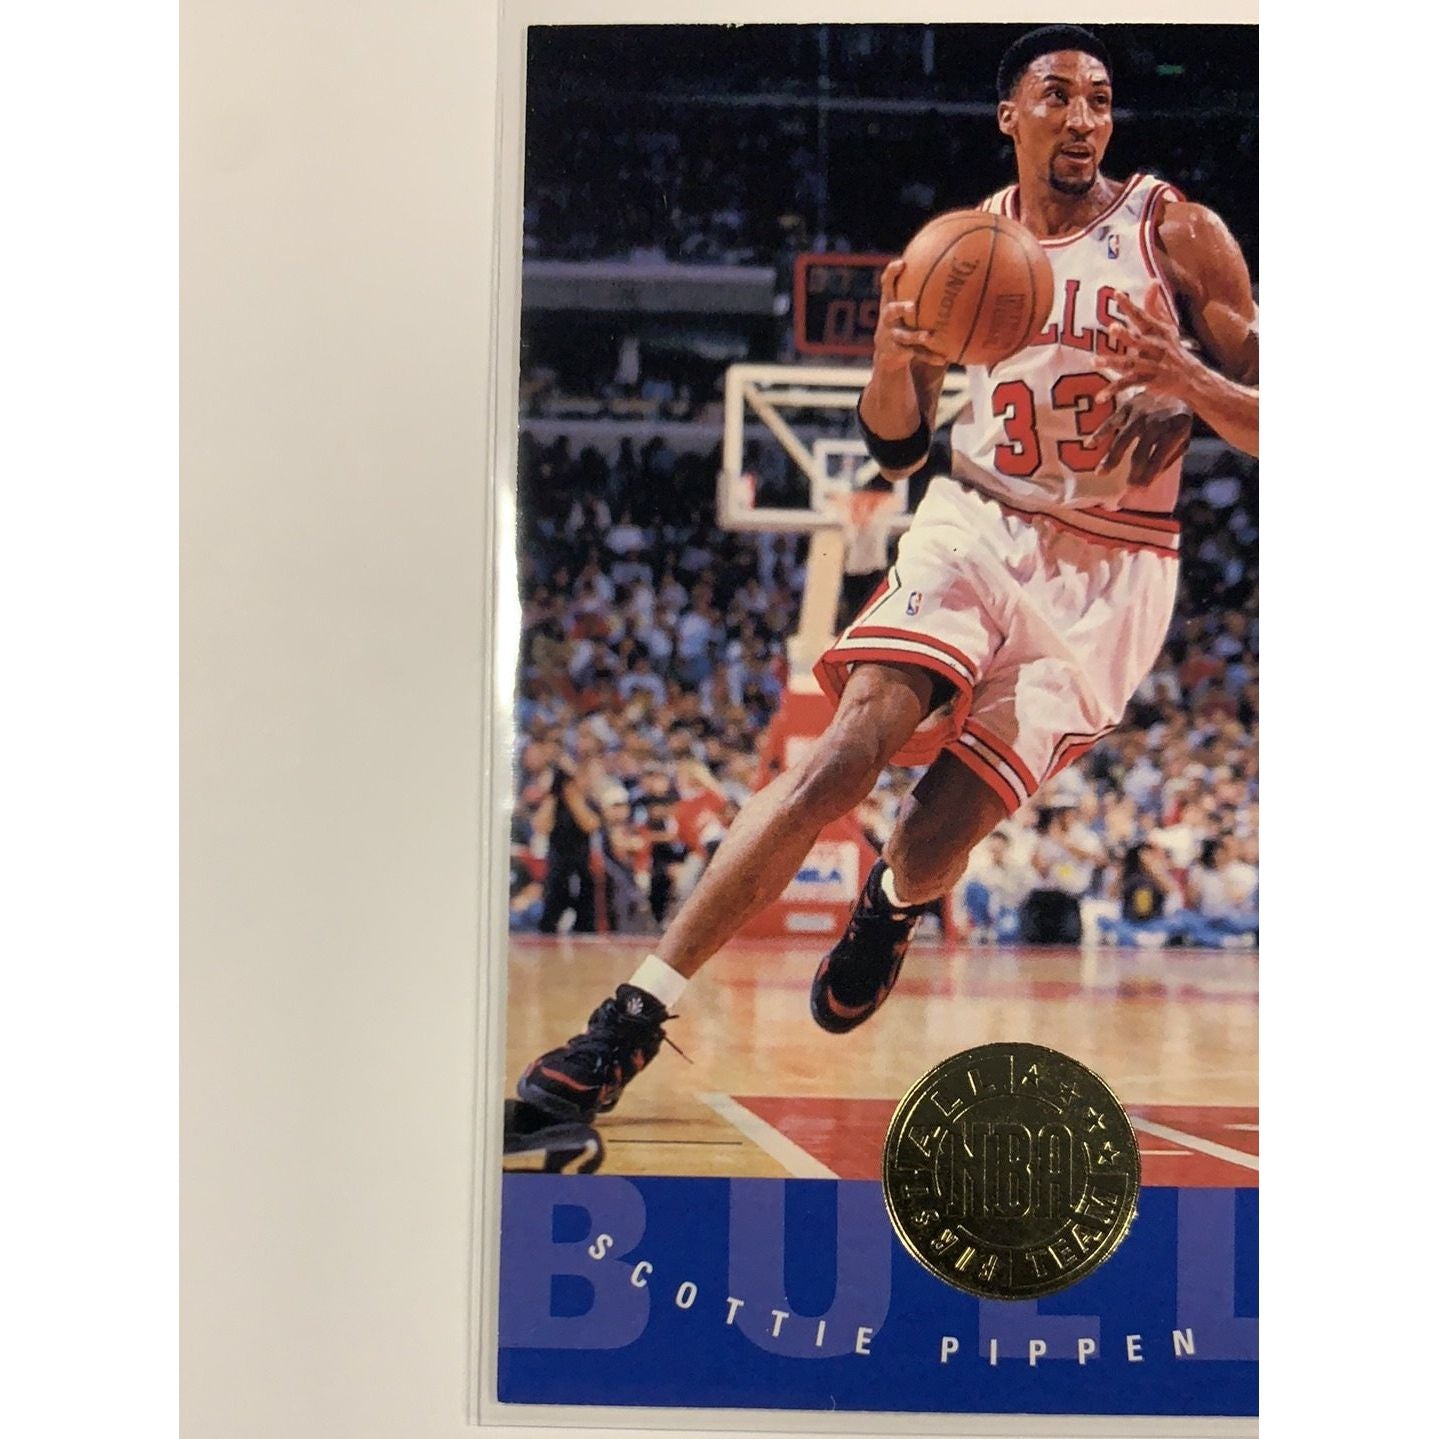  1995 Upper Deck Scottie Pippen 1st Team All Star  Local Legends Cards & Collectibles